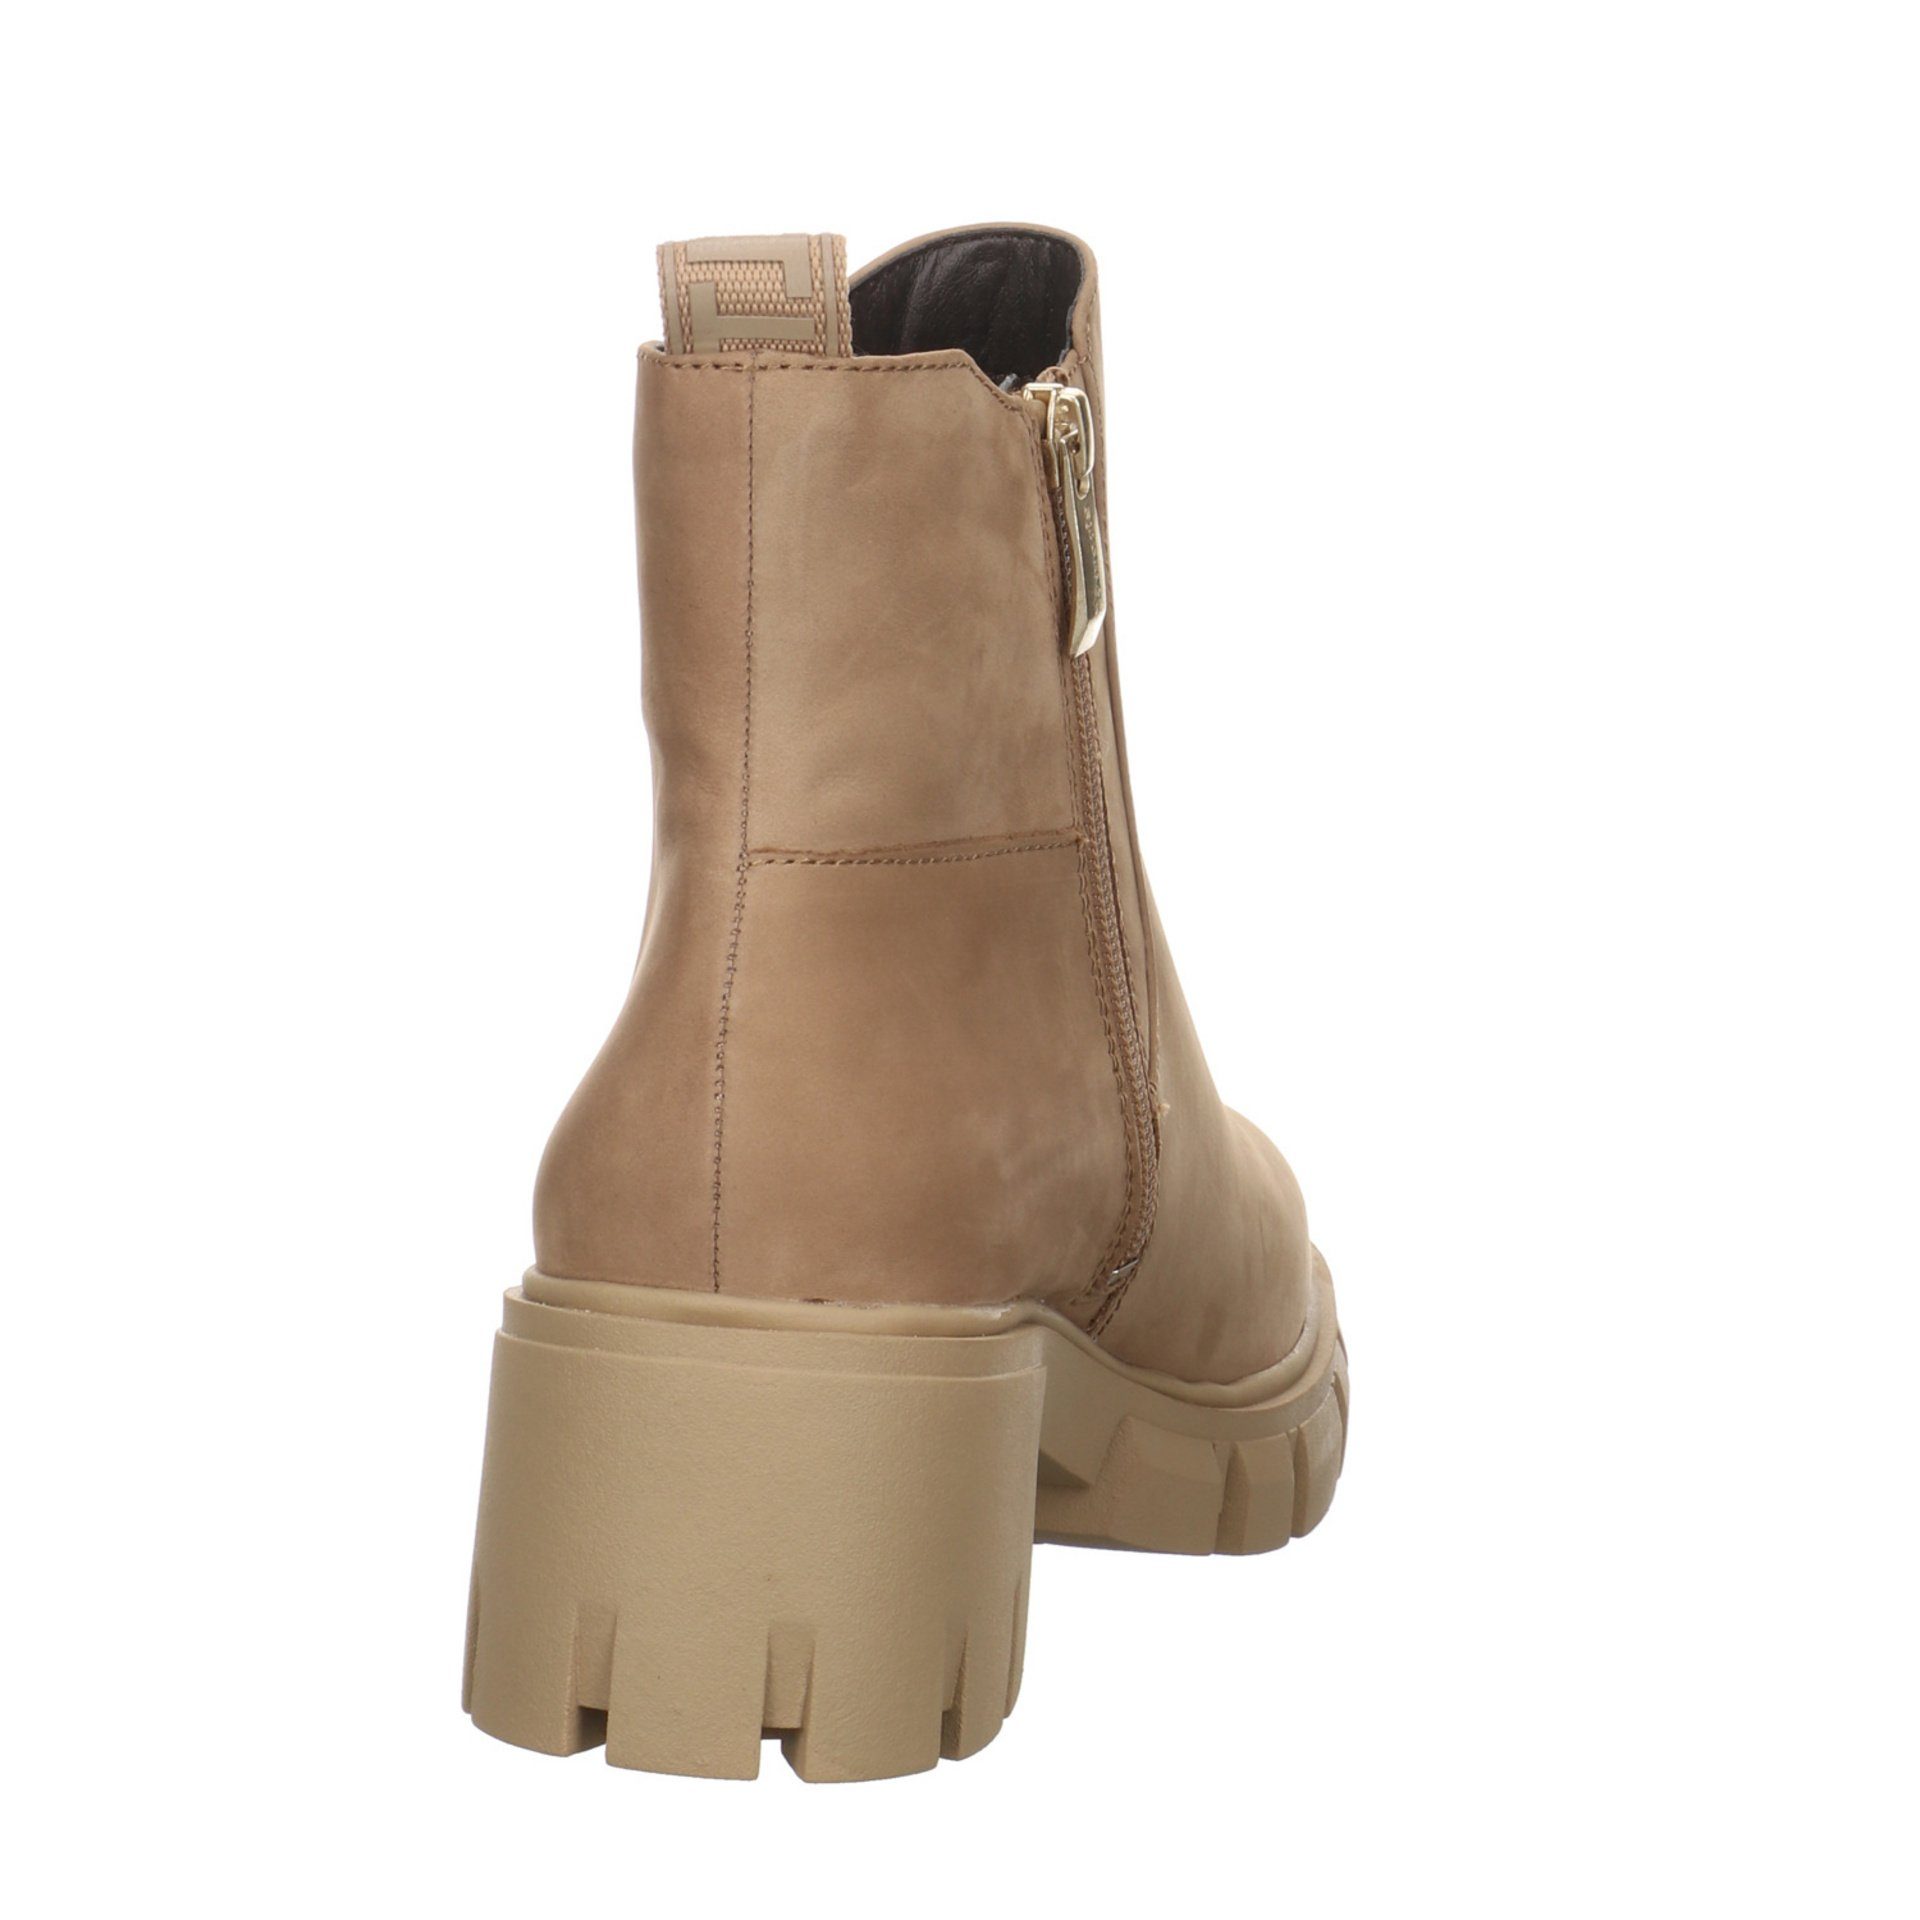 Tamaris Damen Stiefeletten Beige (21203969) Leder-/Textilkombination Stiefelette Boots Chelsea Schuhe